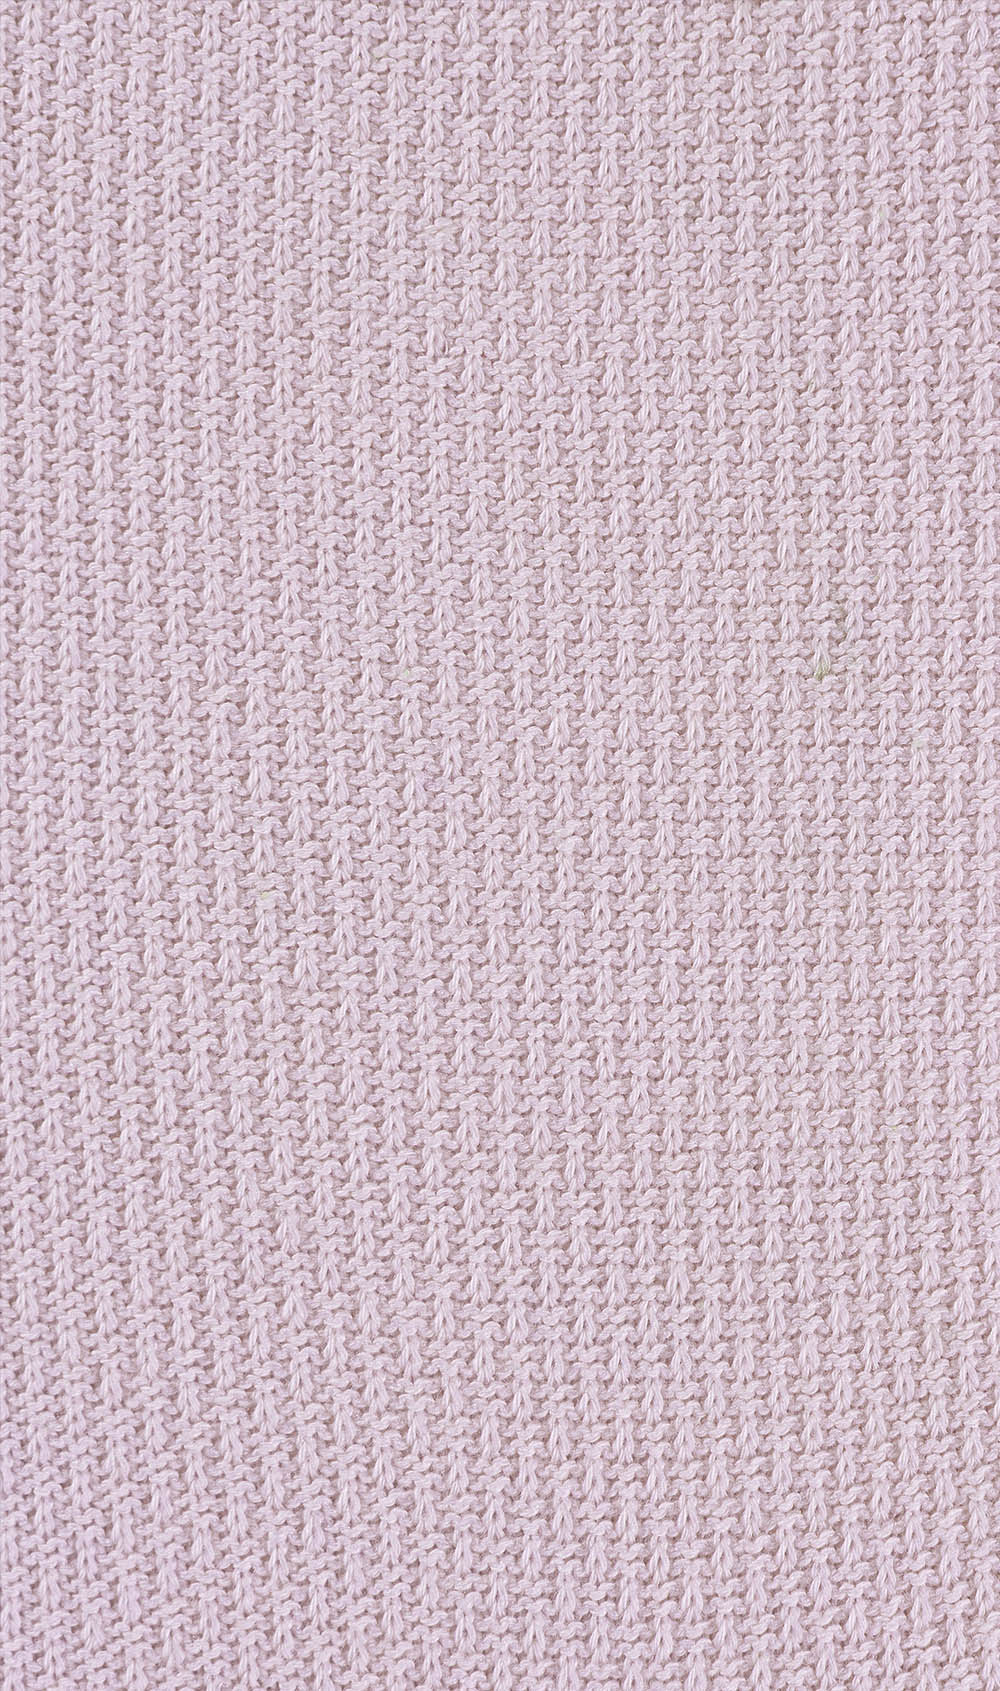 Blush Pink Textured Socks Pattern